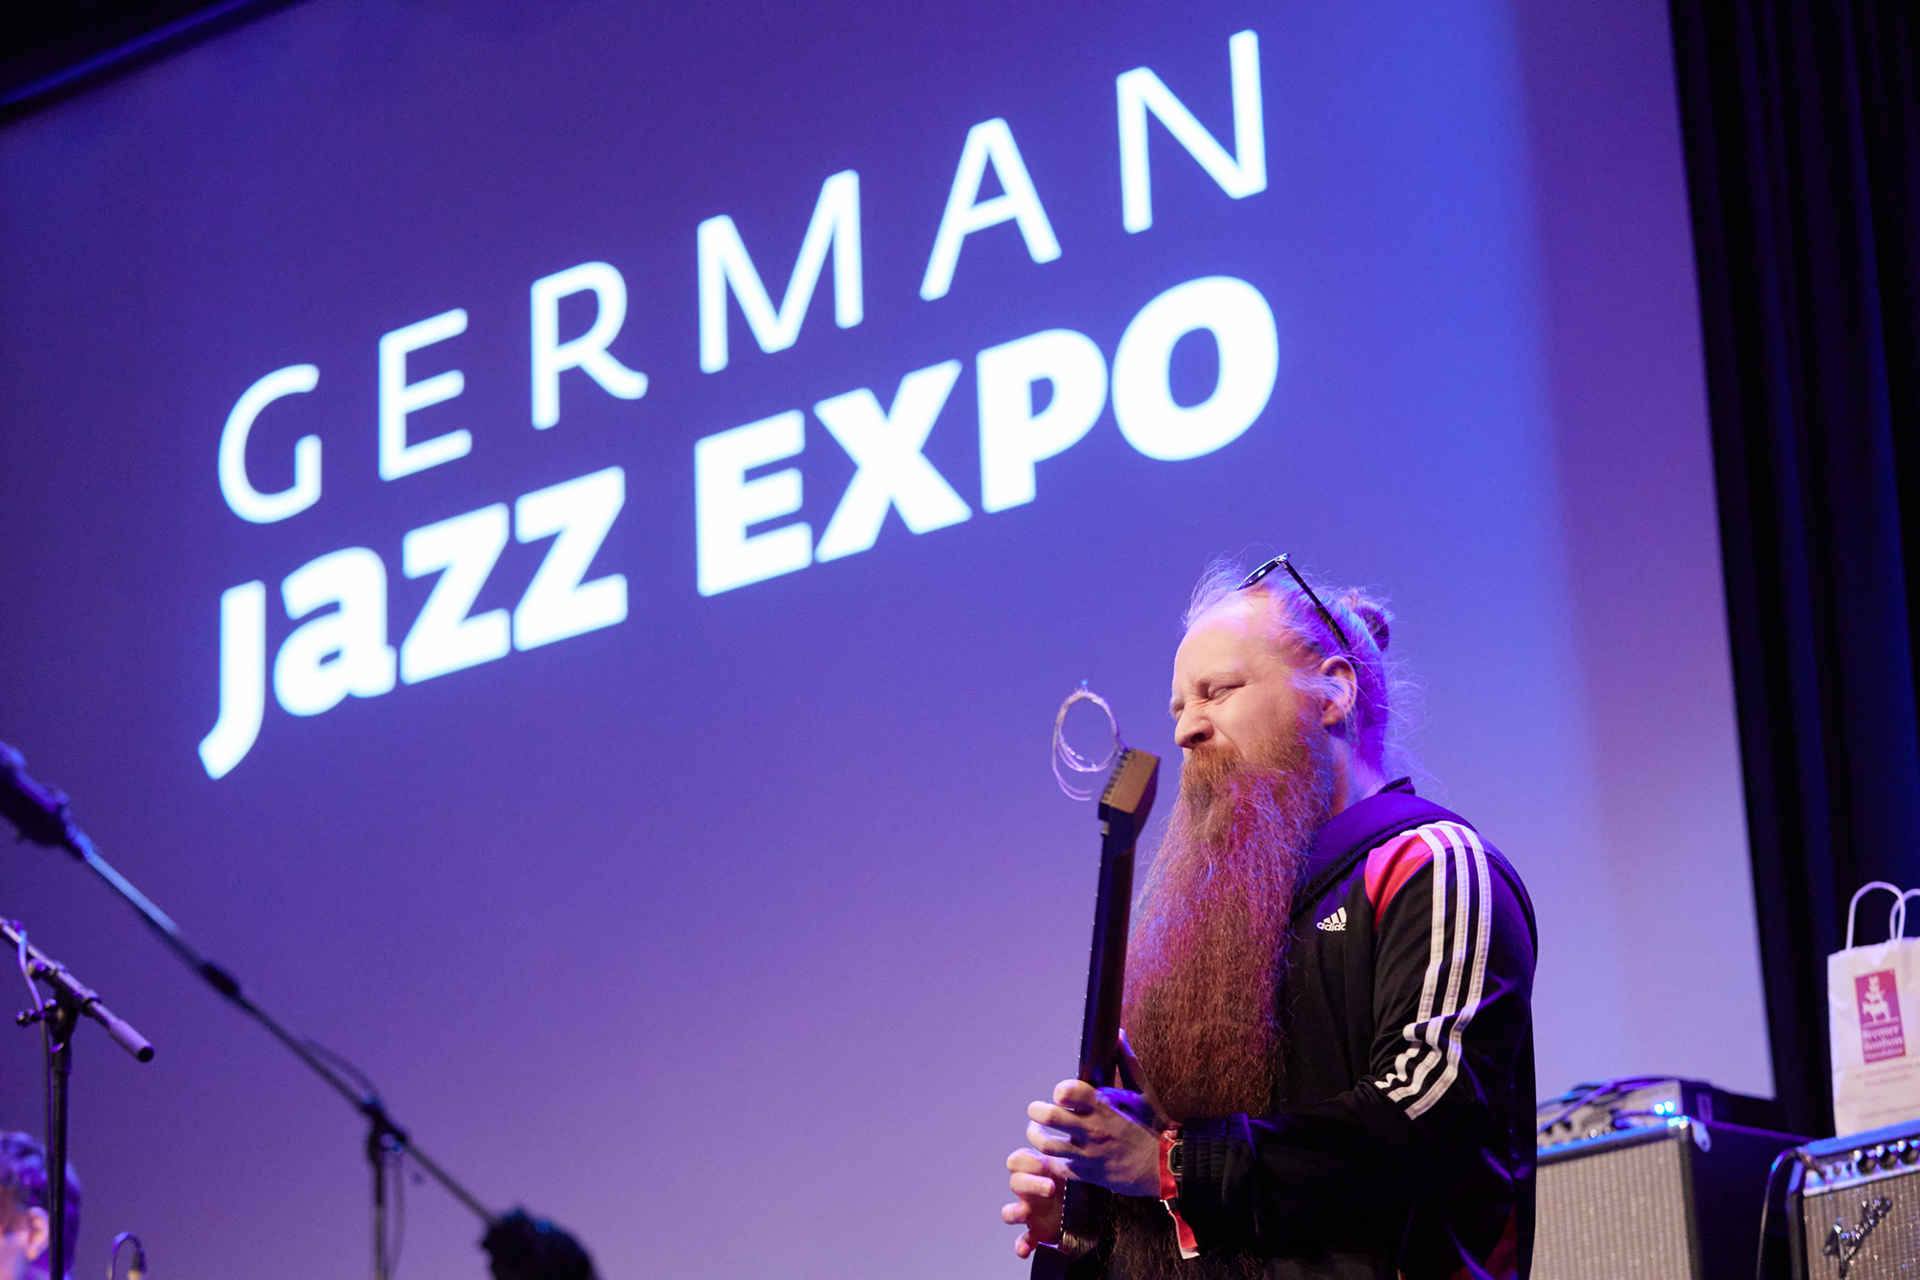 German Jazz Expo 2023